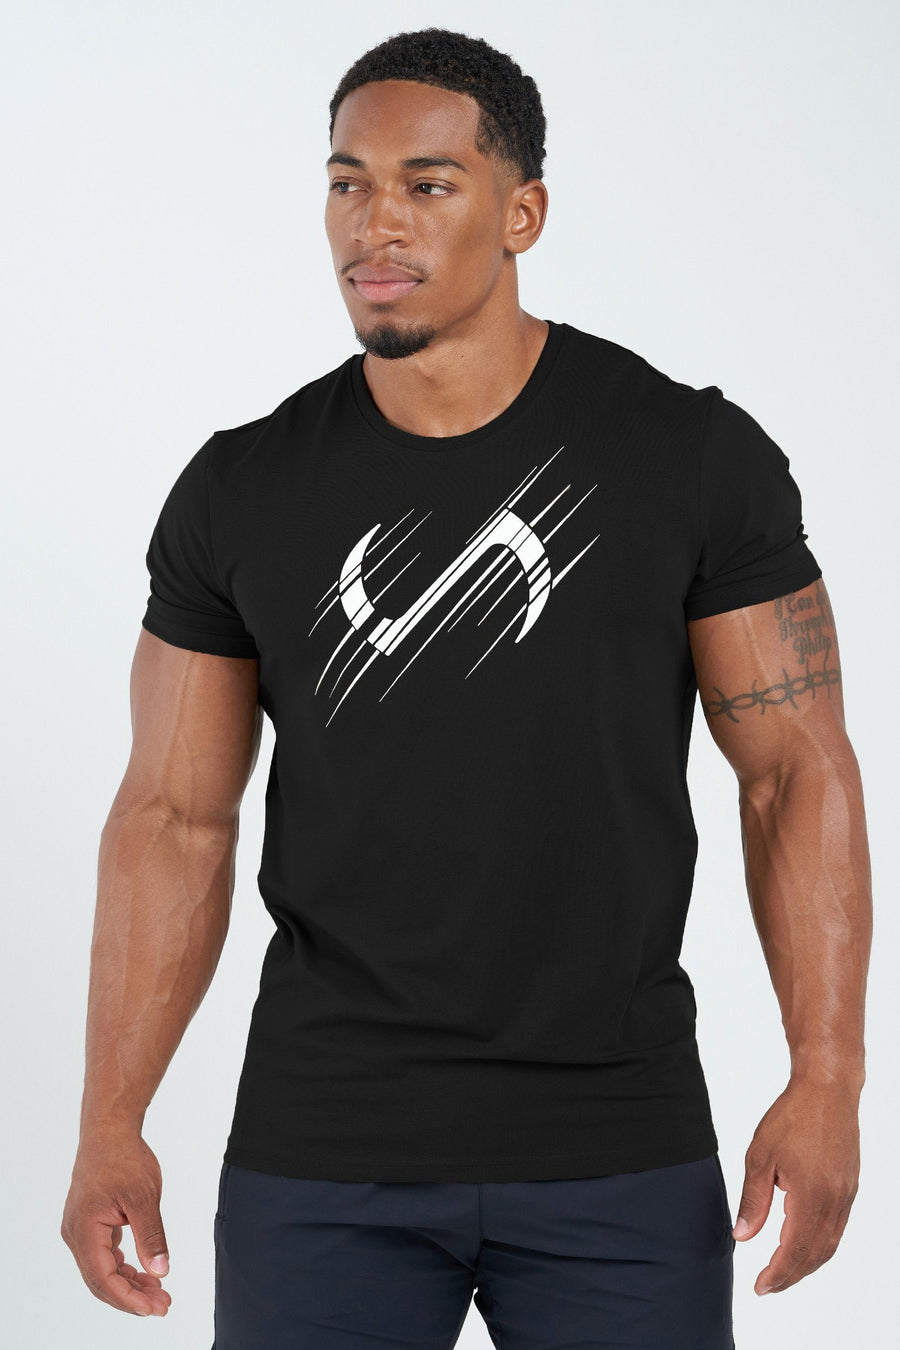 TLF Lift Gym T-Shirt - Gym T Shirts - Black 1